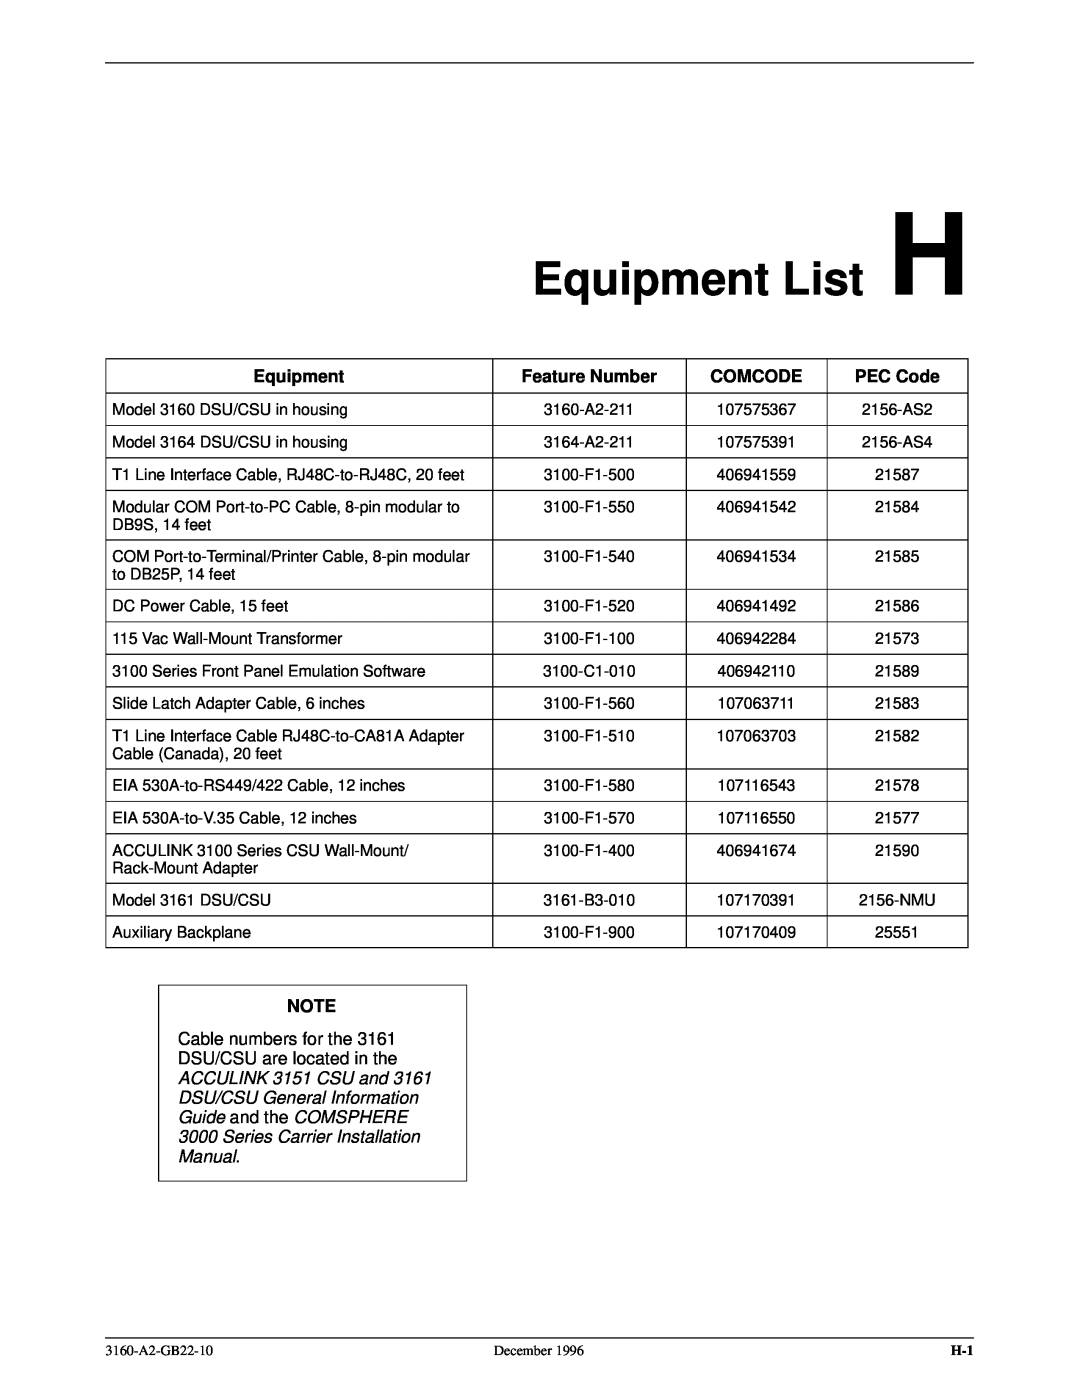 Paradyne 316x Equipment List H, Feature Number, Comcode, PEC Code, ACCULINK 3151 CSU and, DSU/CSU General Information 